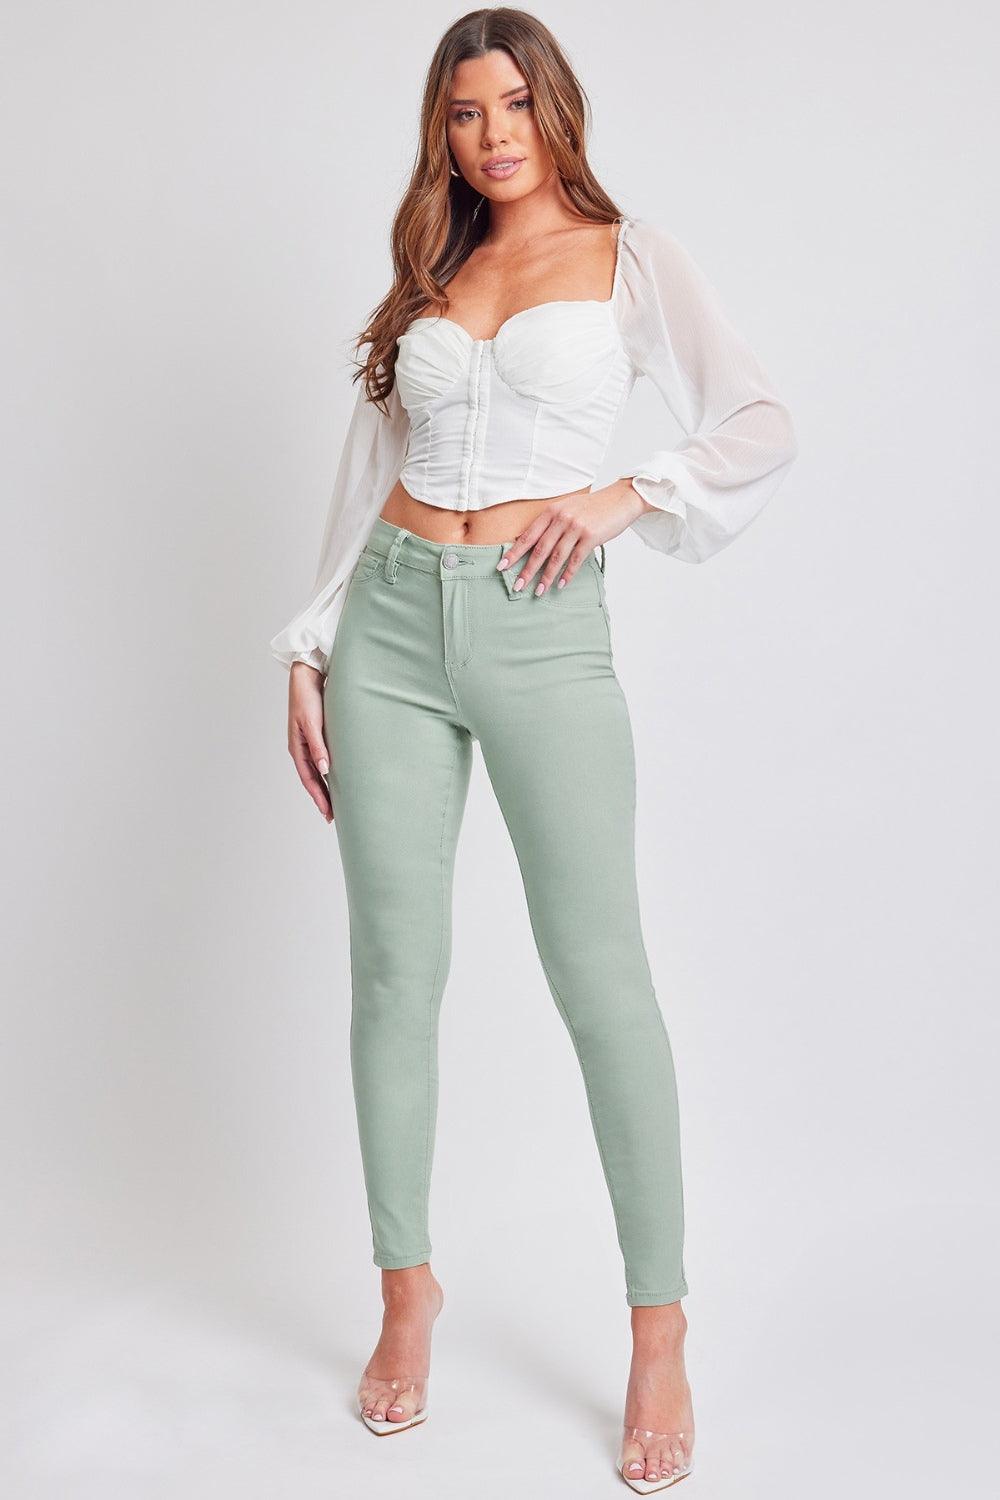 YMI Jeanswear Hyperstretch Mid-Rise Skinny Jeans Jade Jeans